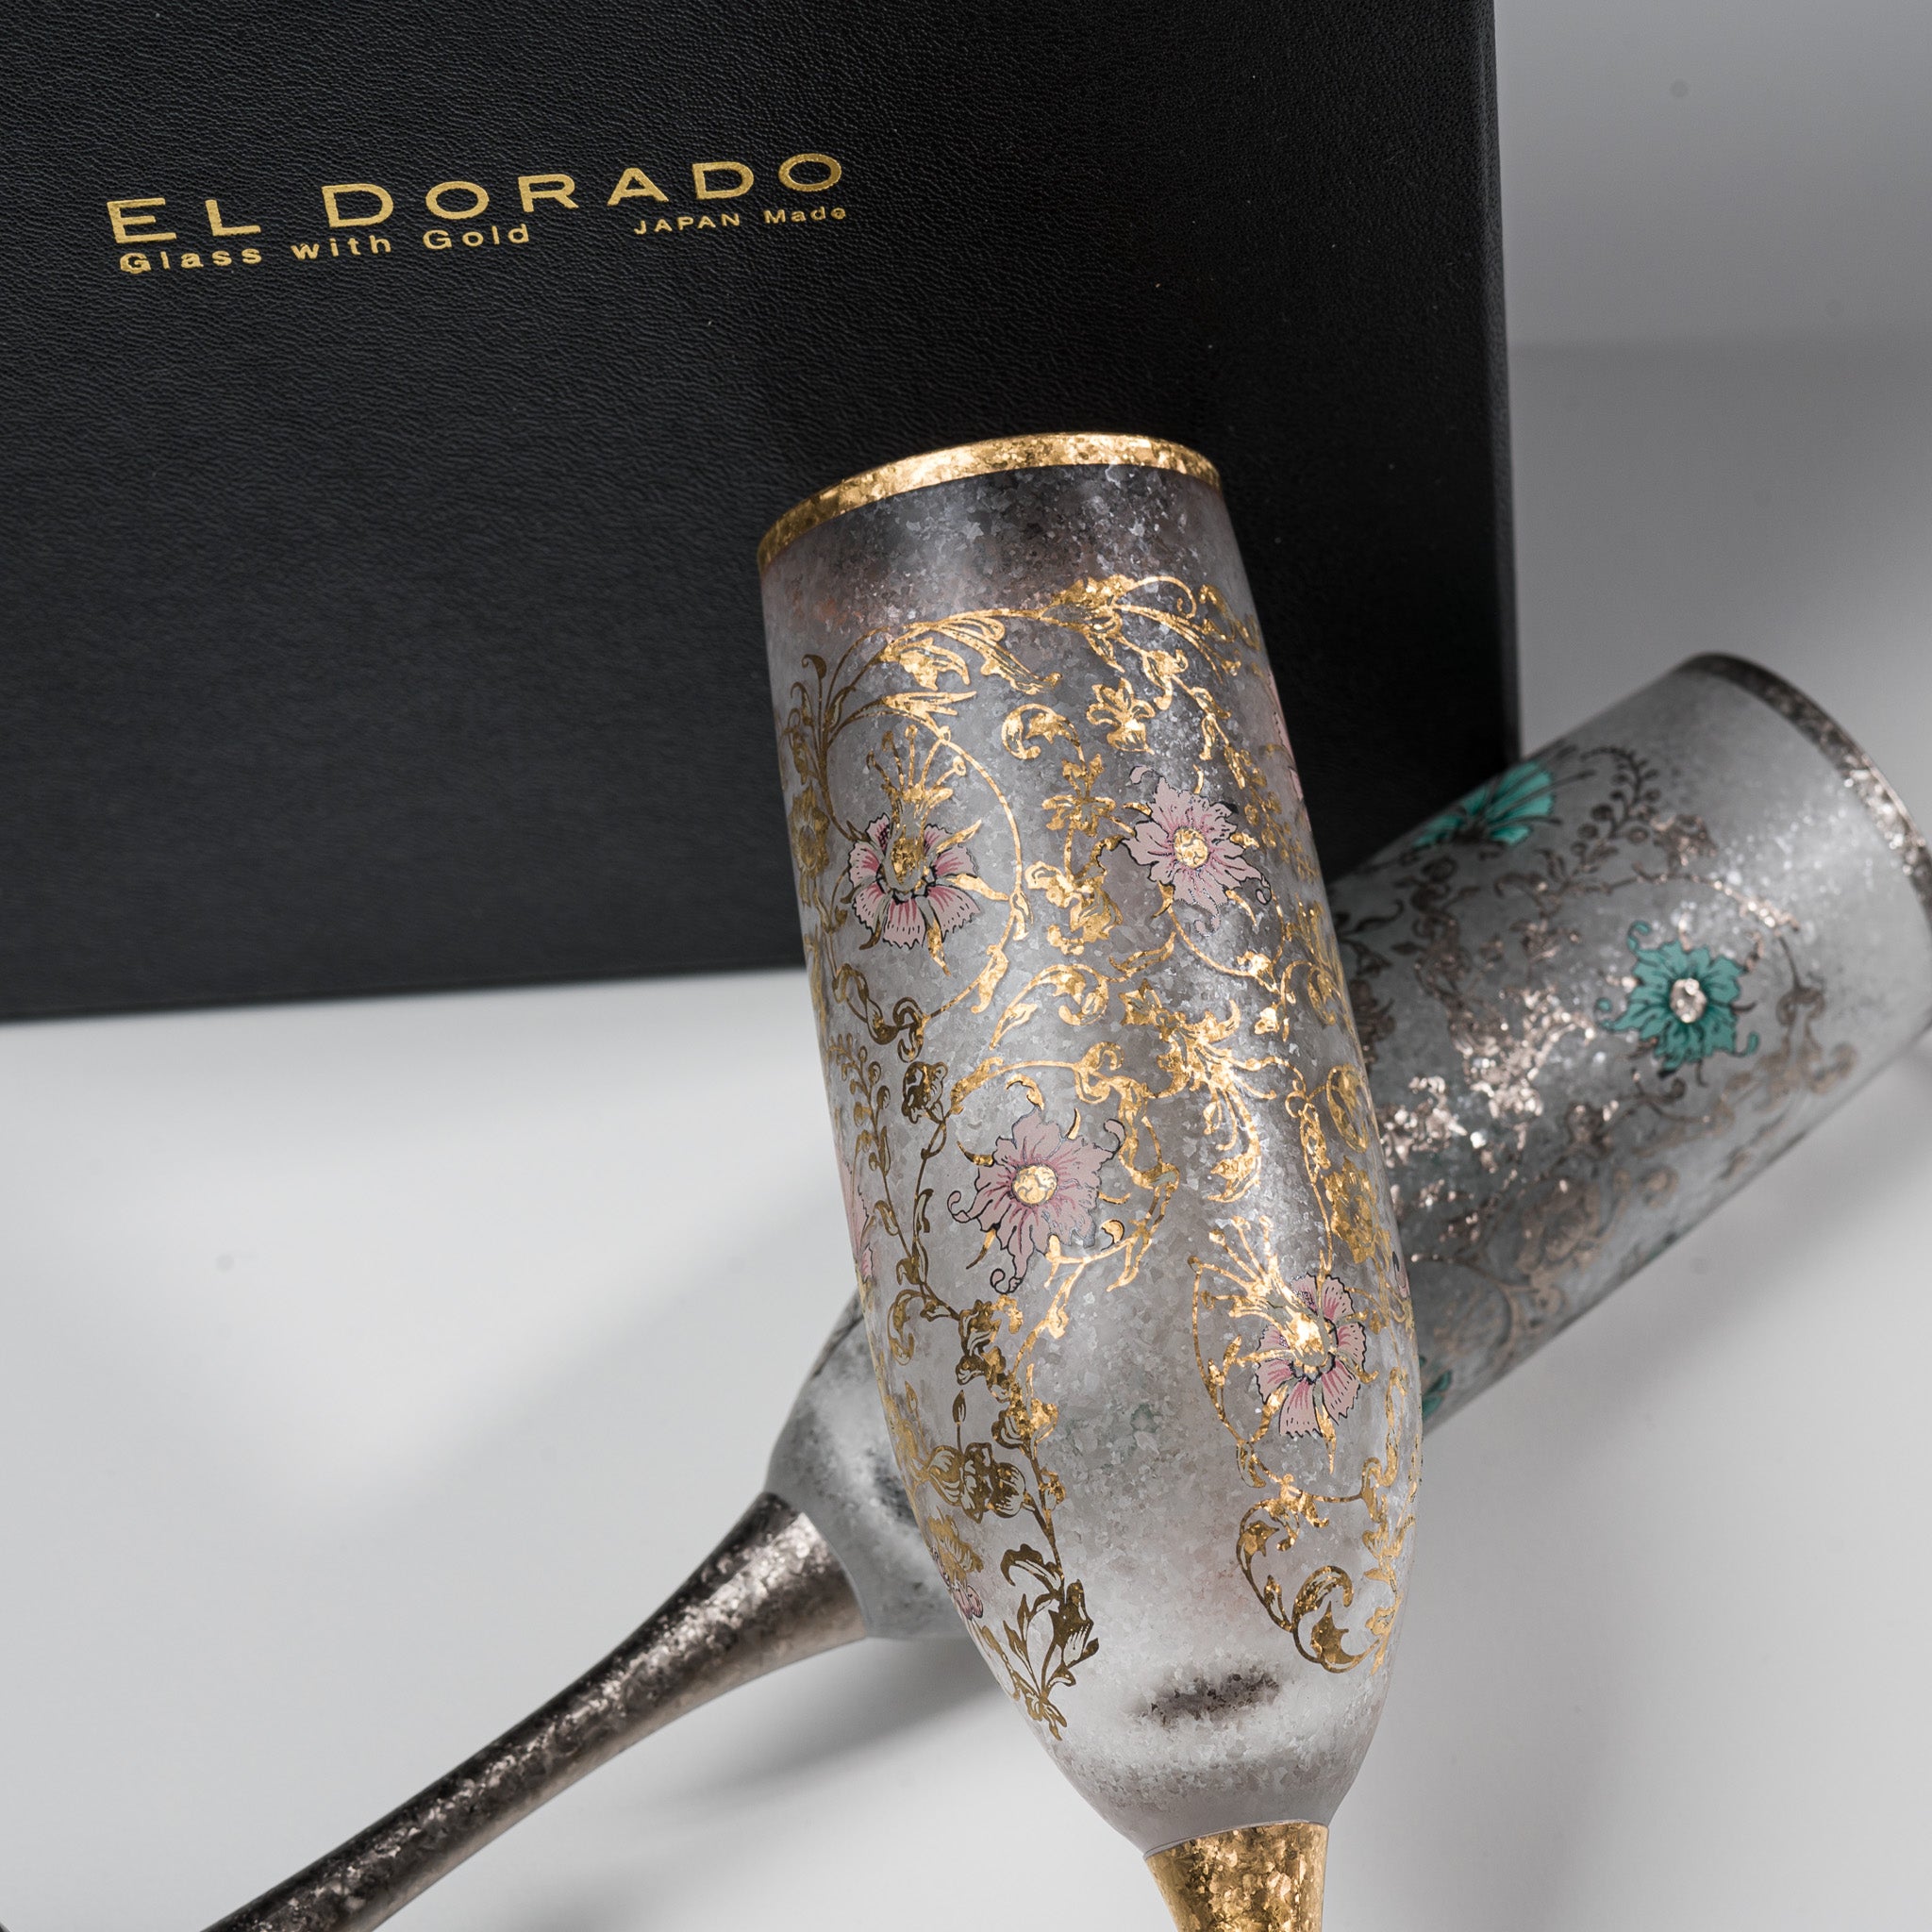 EL DORADO Pair Flute Glass / エレガンス ペアシャンパングラス